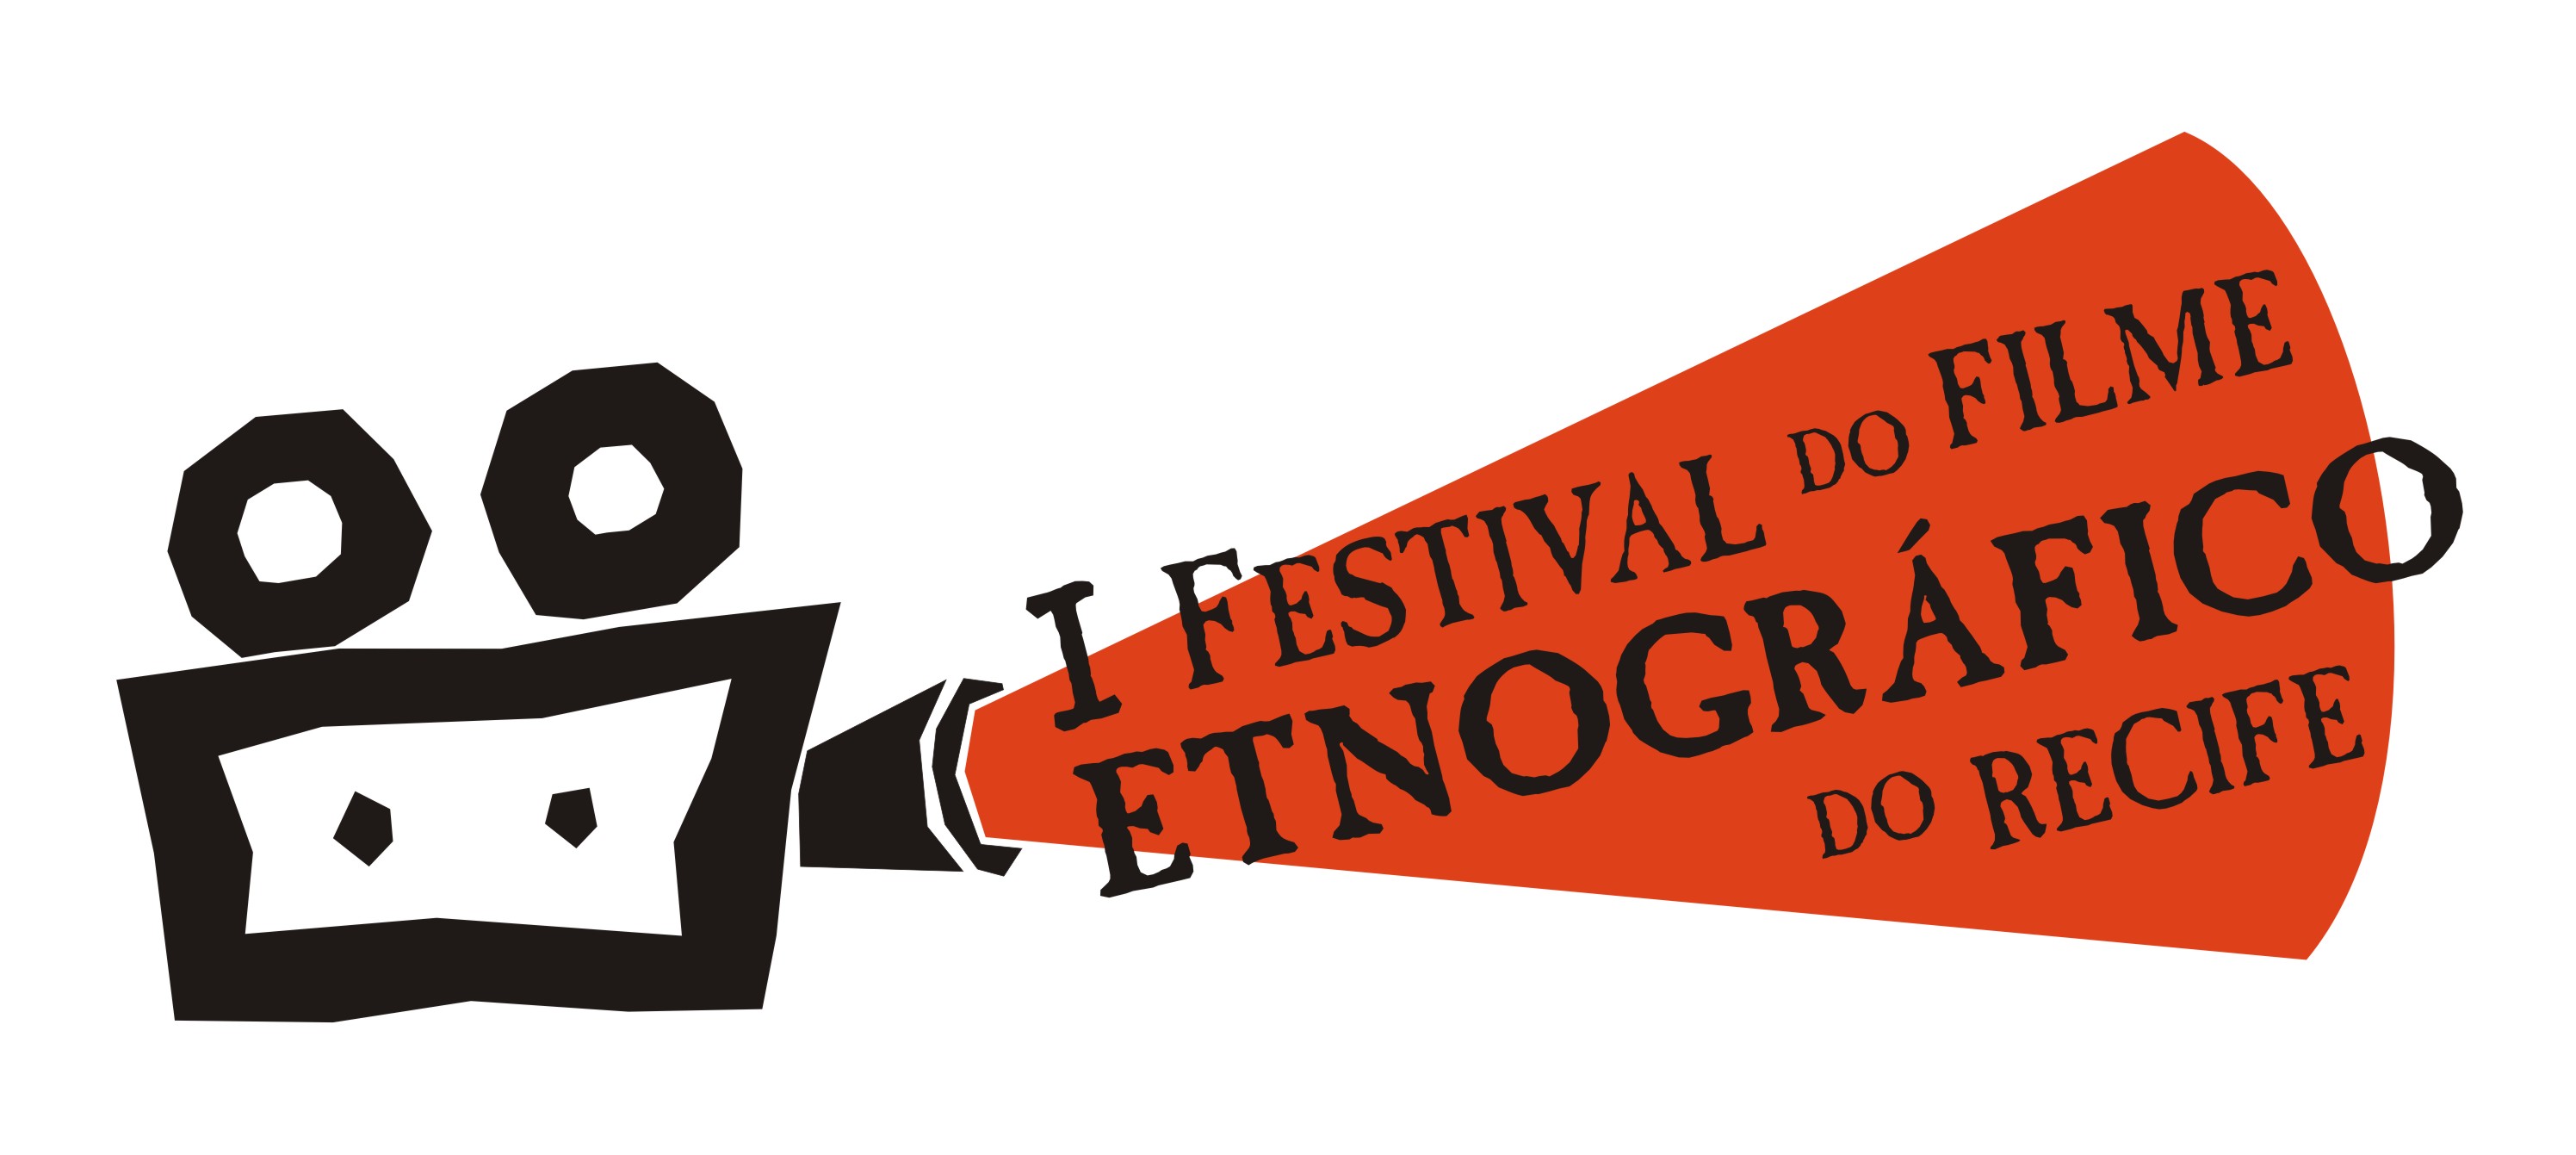 II Festival do Filme Etnogrfico